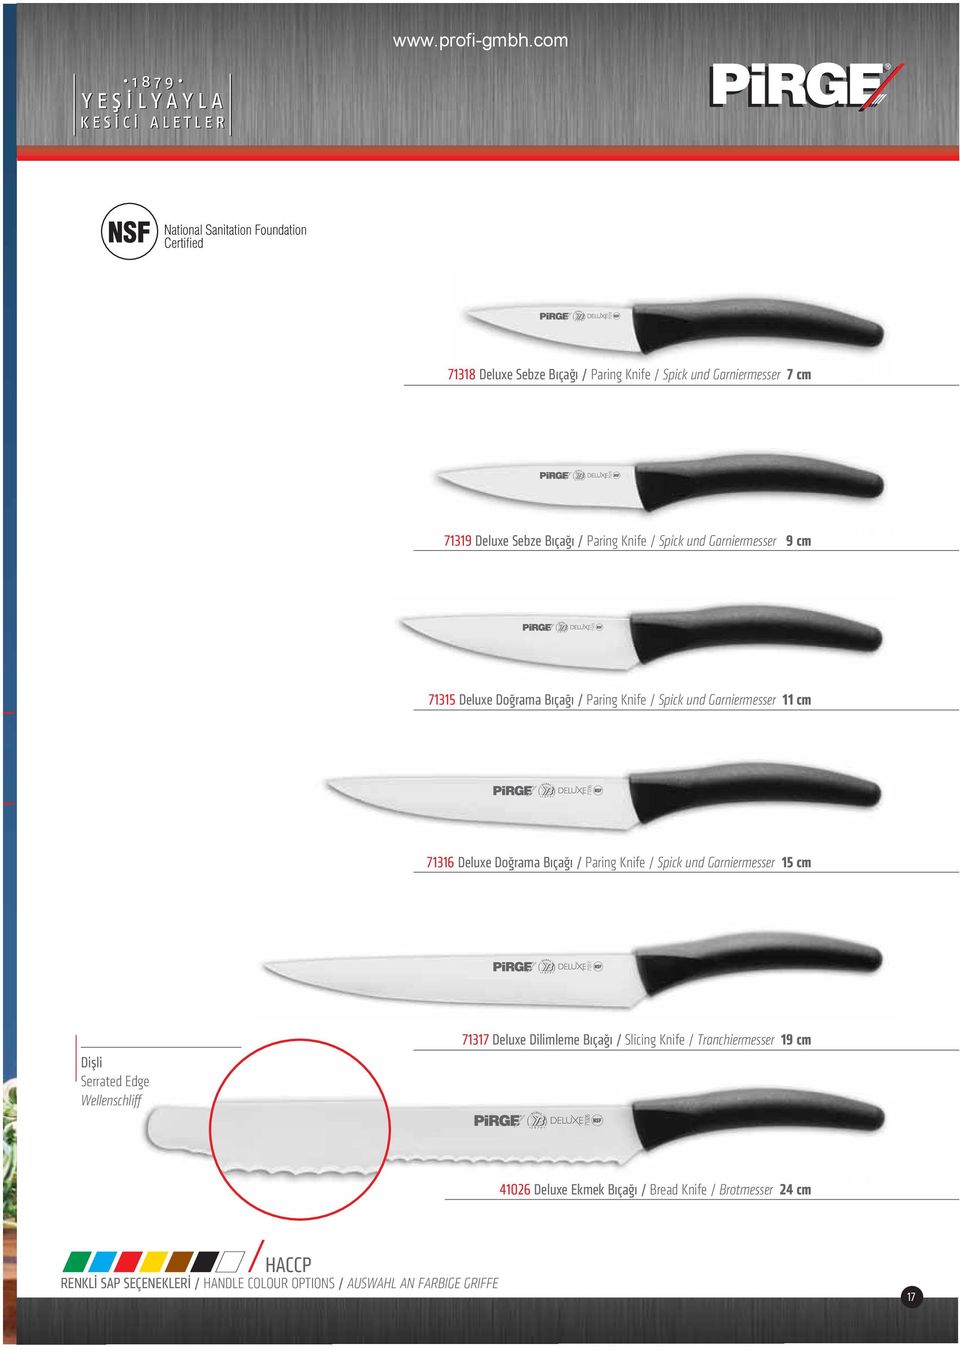 Doğrama Bıçağı / Paring Knife / Spick und Garniermesser 15 cm 12, 74 71317 Dişli Serrated Edge Wellenschliff 71317 Deluxe Dilimleme Bıçağı / Slicing Knife /